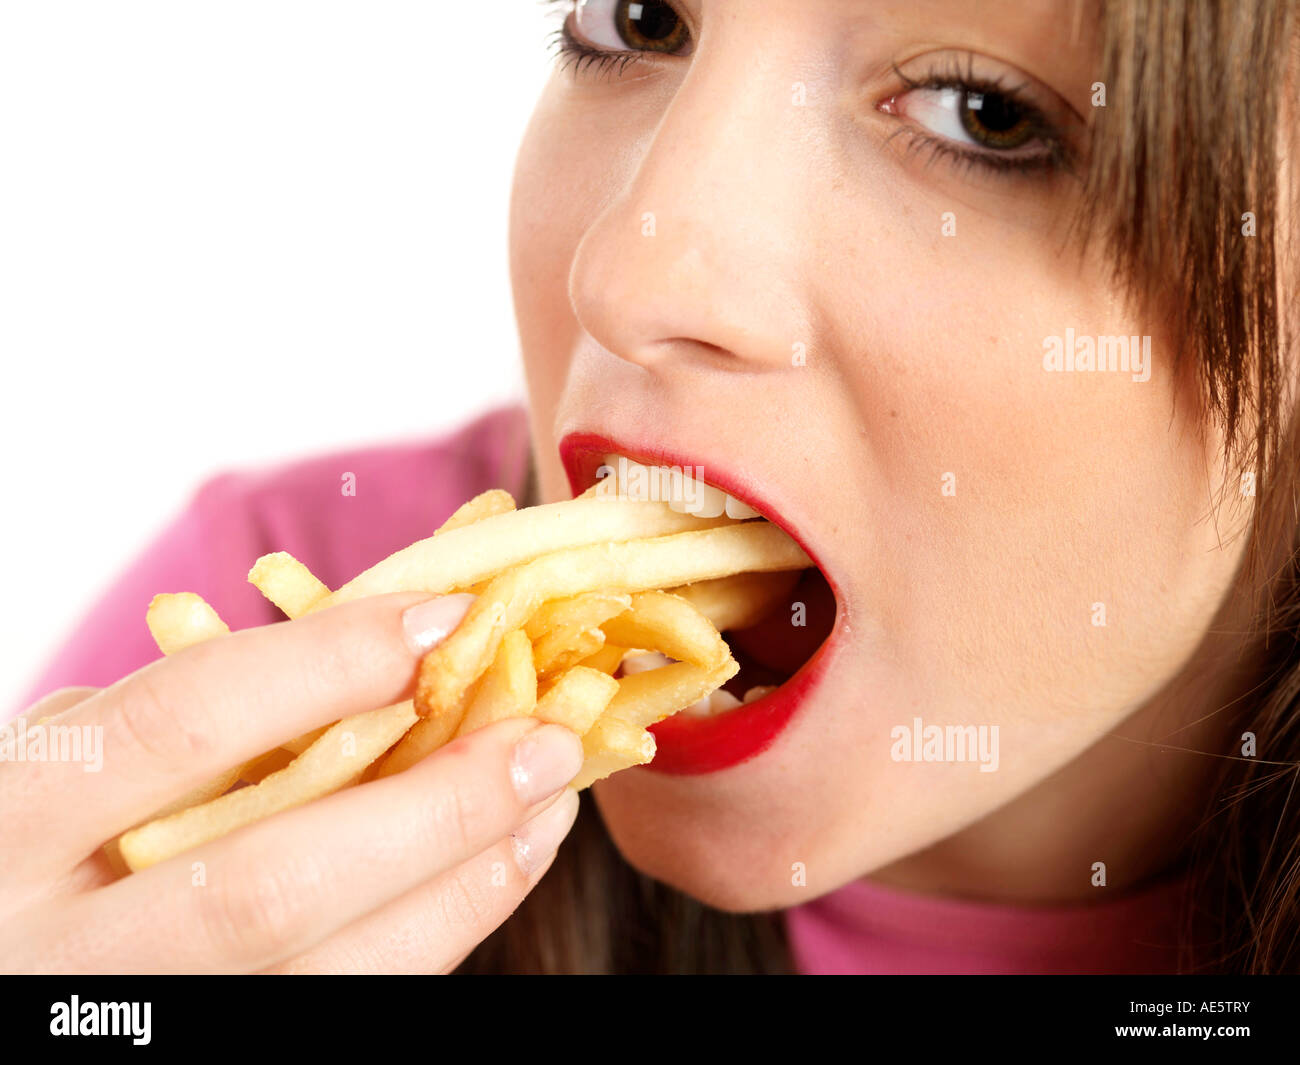 Teenage Girl Eating Chips Model Released Stock Photo